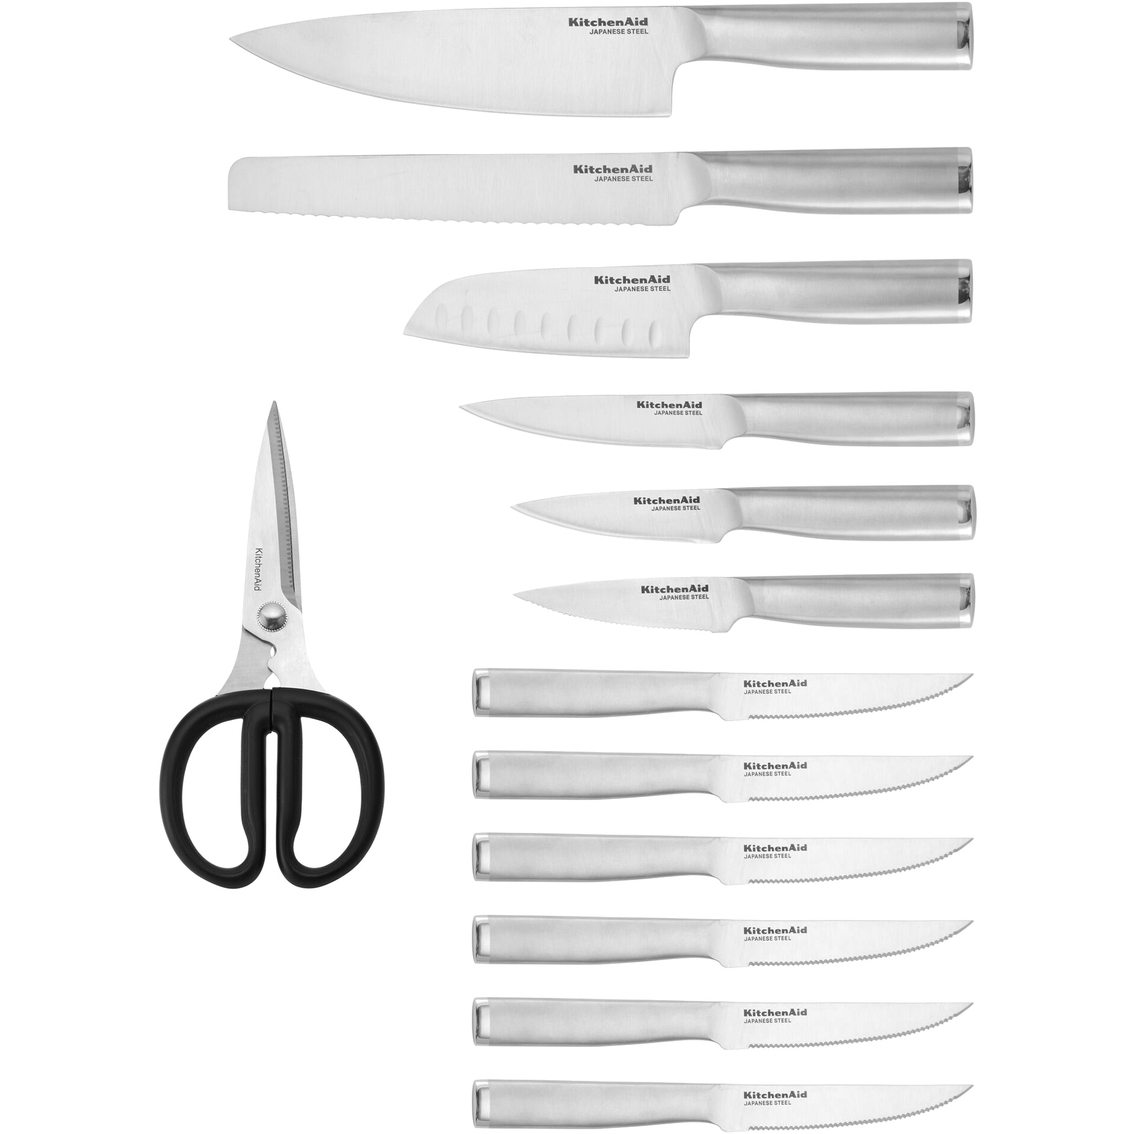 KitchenAid Gourmet Stainless Steel Block Cutlery Set 14 pc. - Image 2 of 5